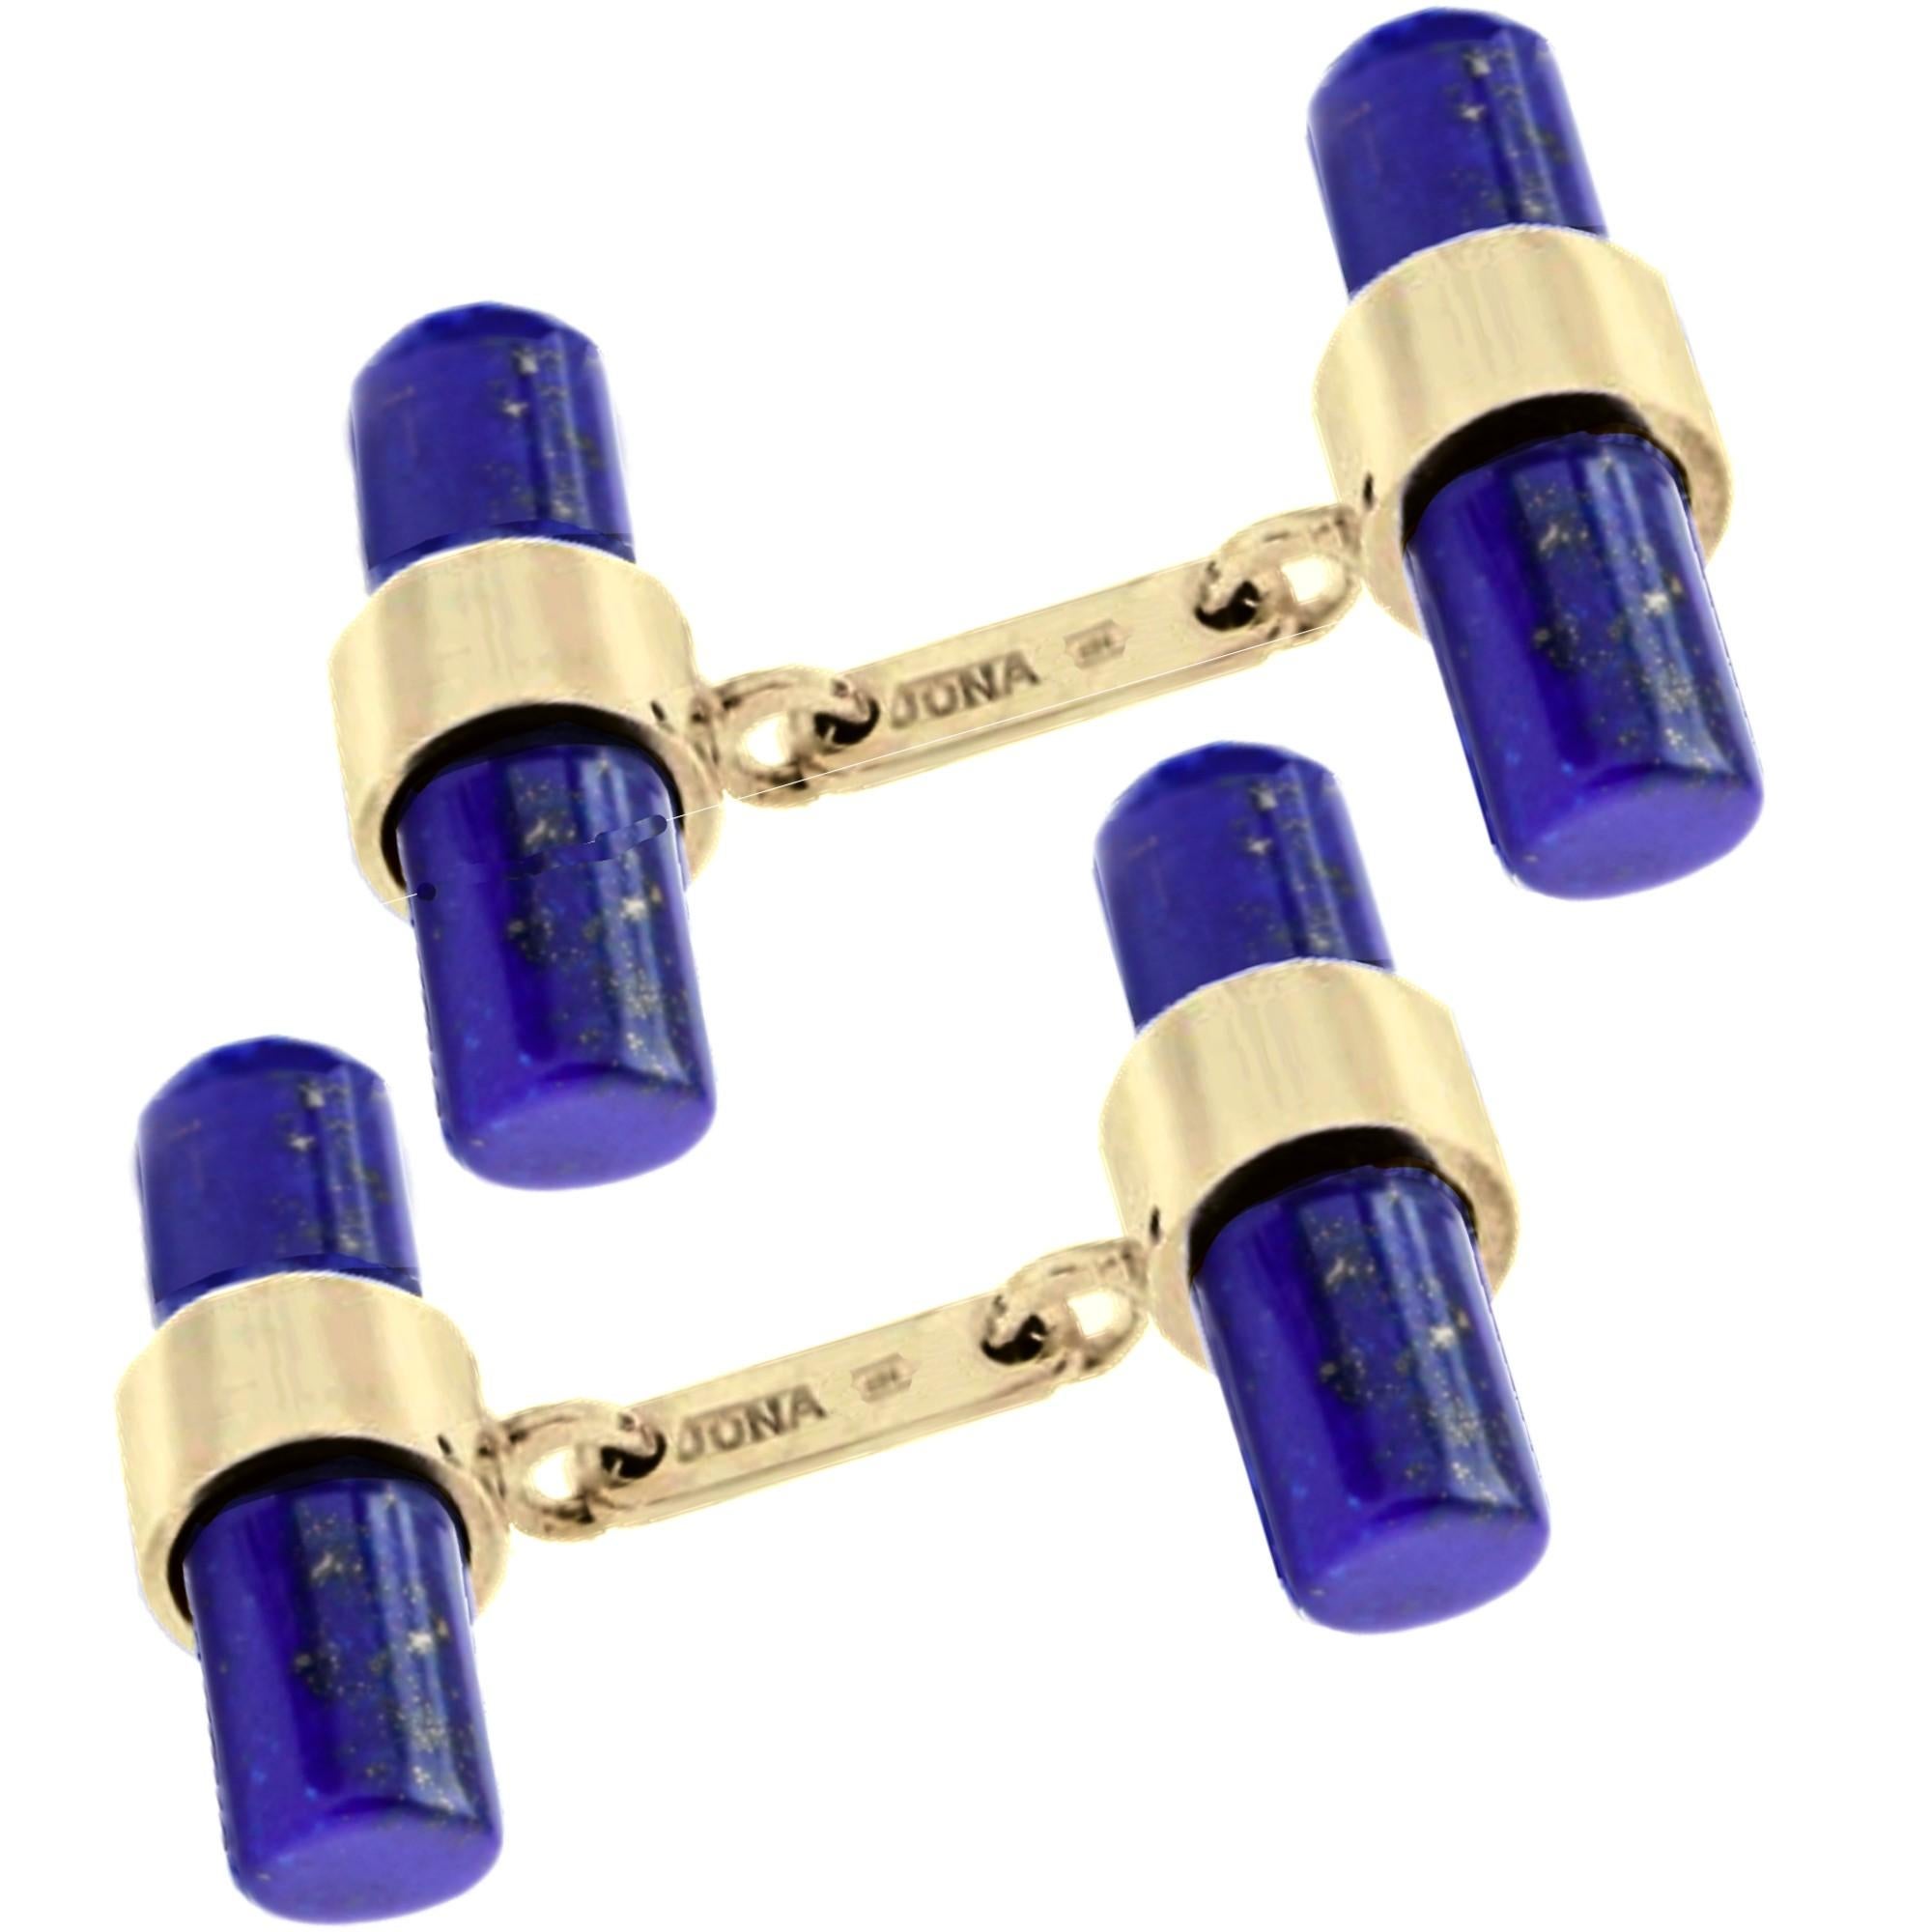 Mixed Cut Alex Jona Lapis Lazuli Cylindrical Bar Cufflinks in 18 Karat Yellow Gold For Sale